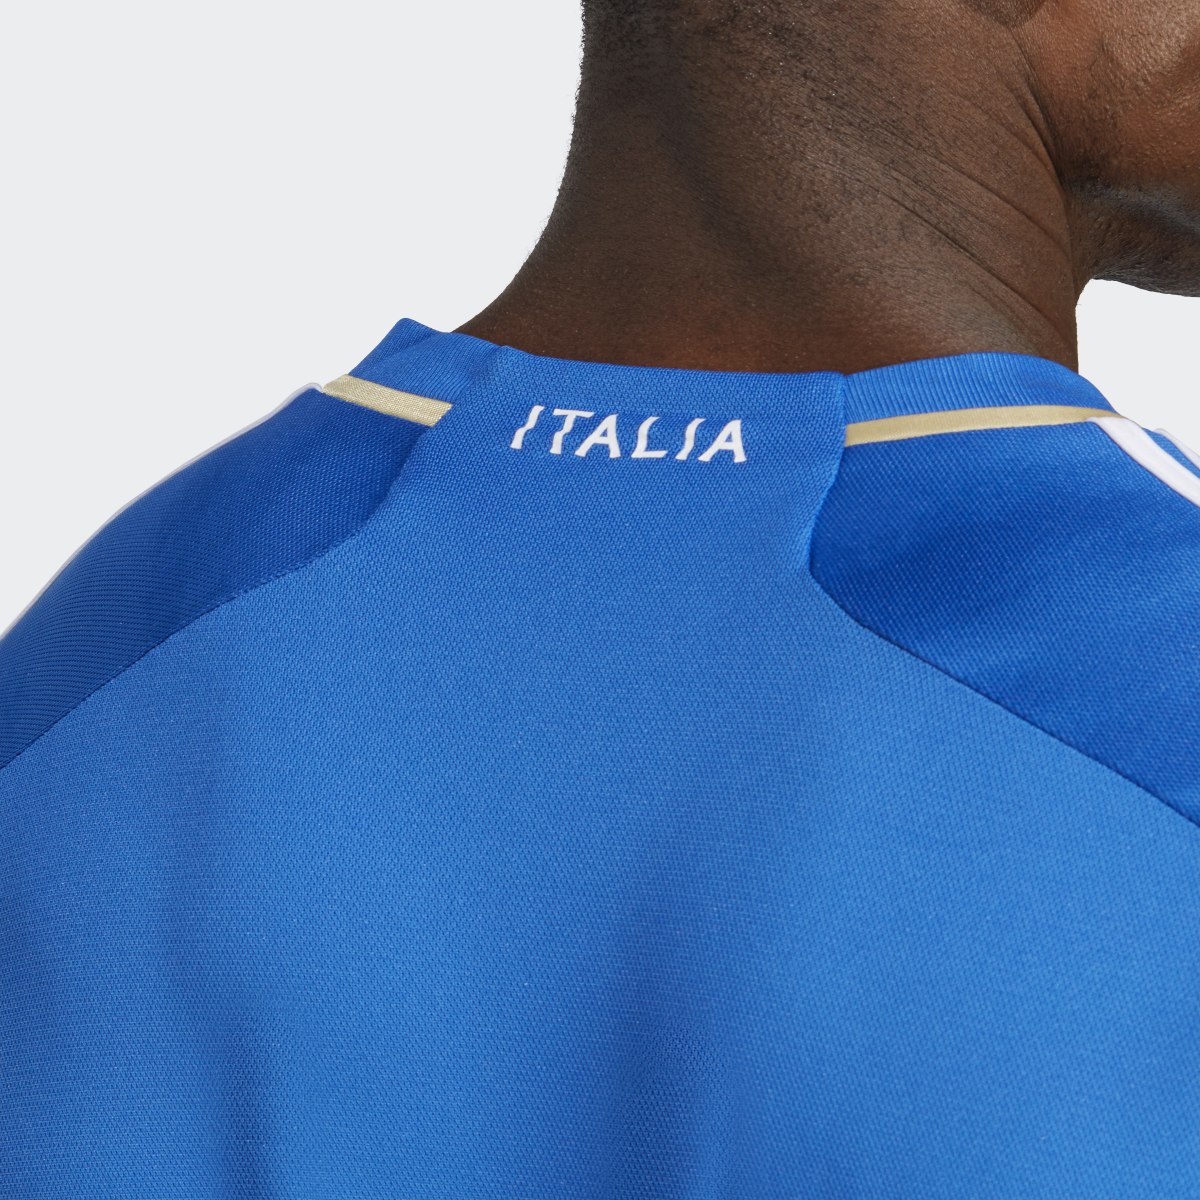 Adidas Italy 23 Home Long Sleeve Jersey. 10